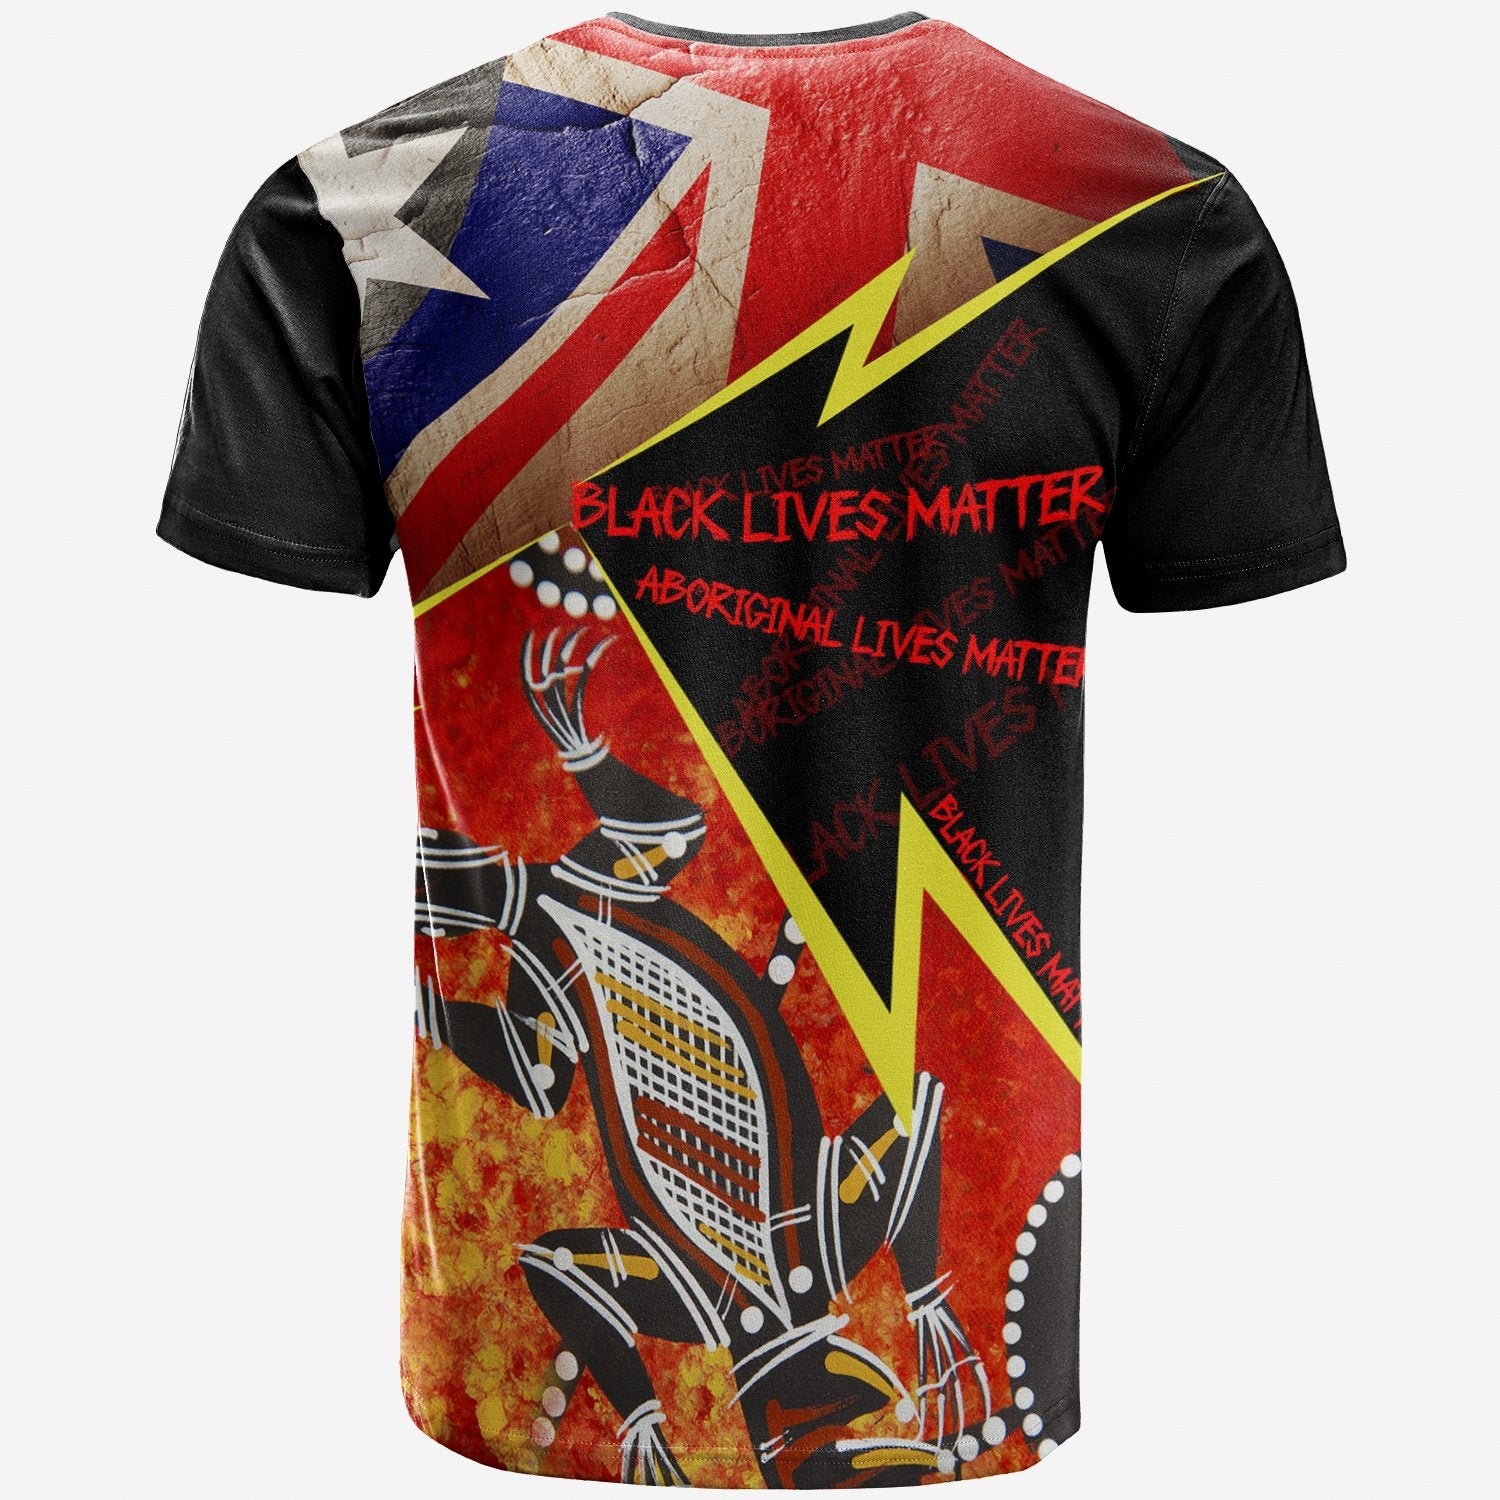 tshirts-aboriginal-lives-matter-black-lives-matter